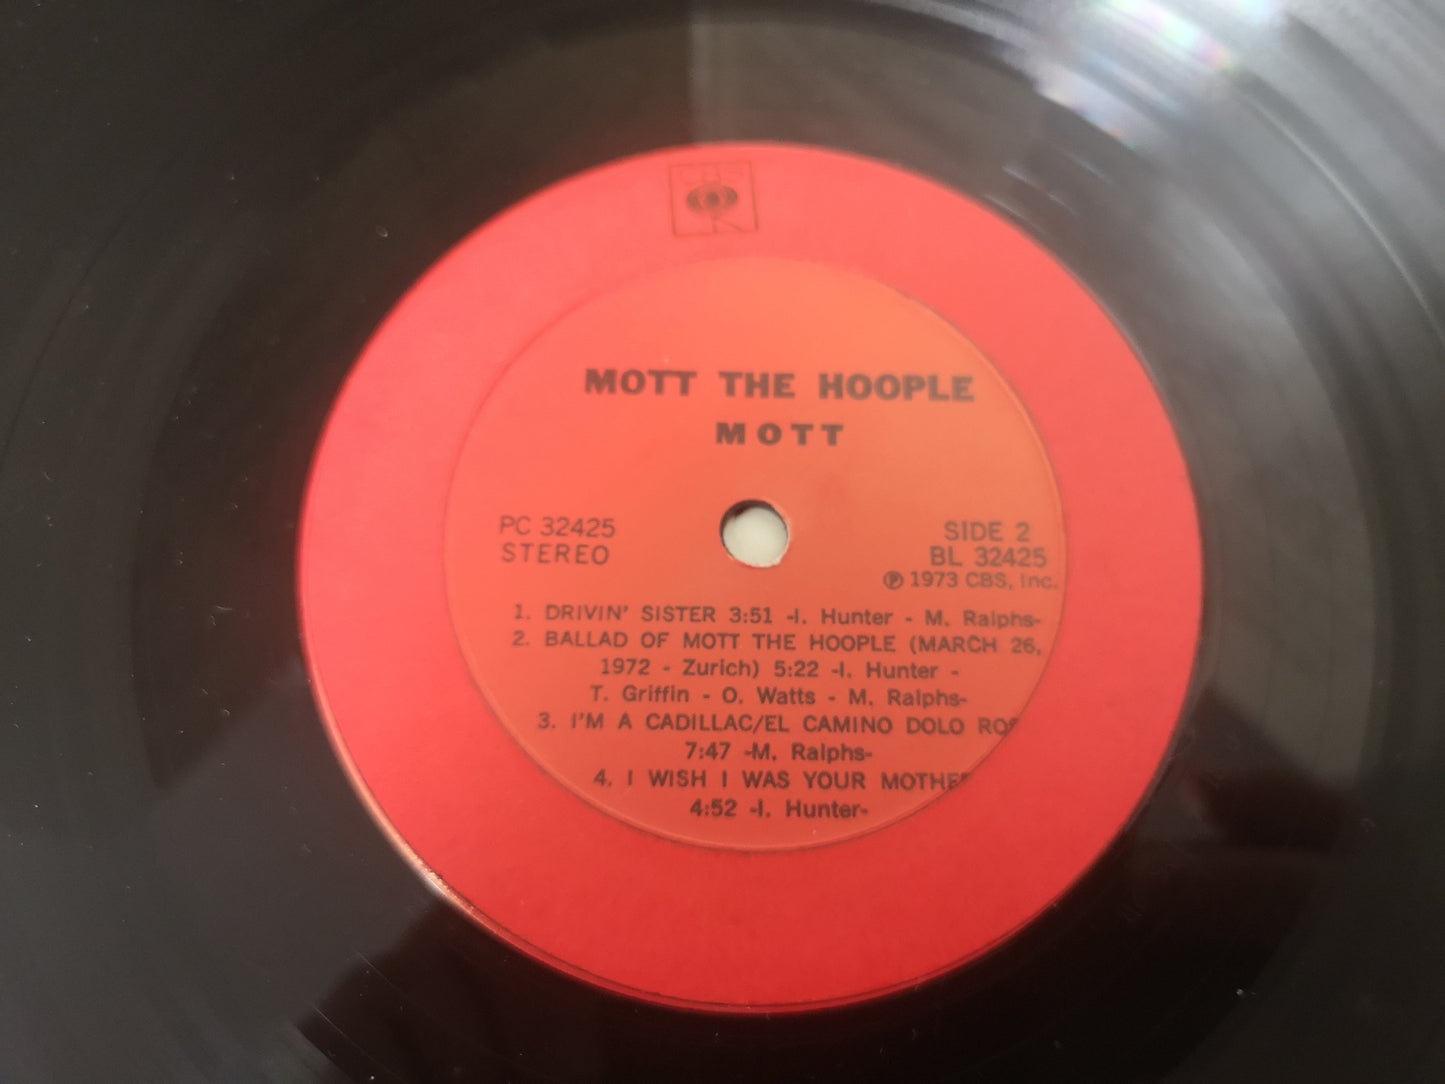 Mott the Hoople "Mott" Re US 1973/78 Ex/Ex